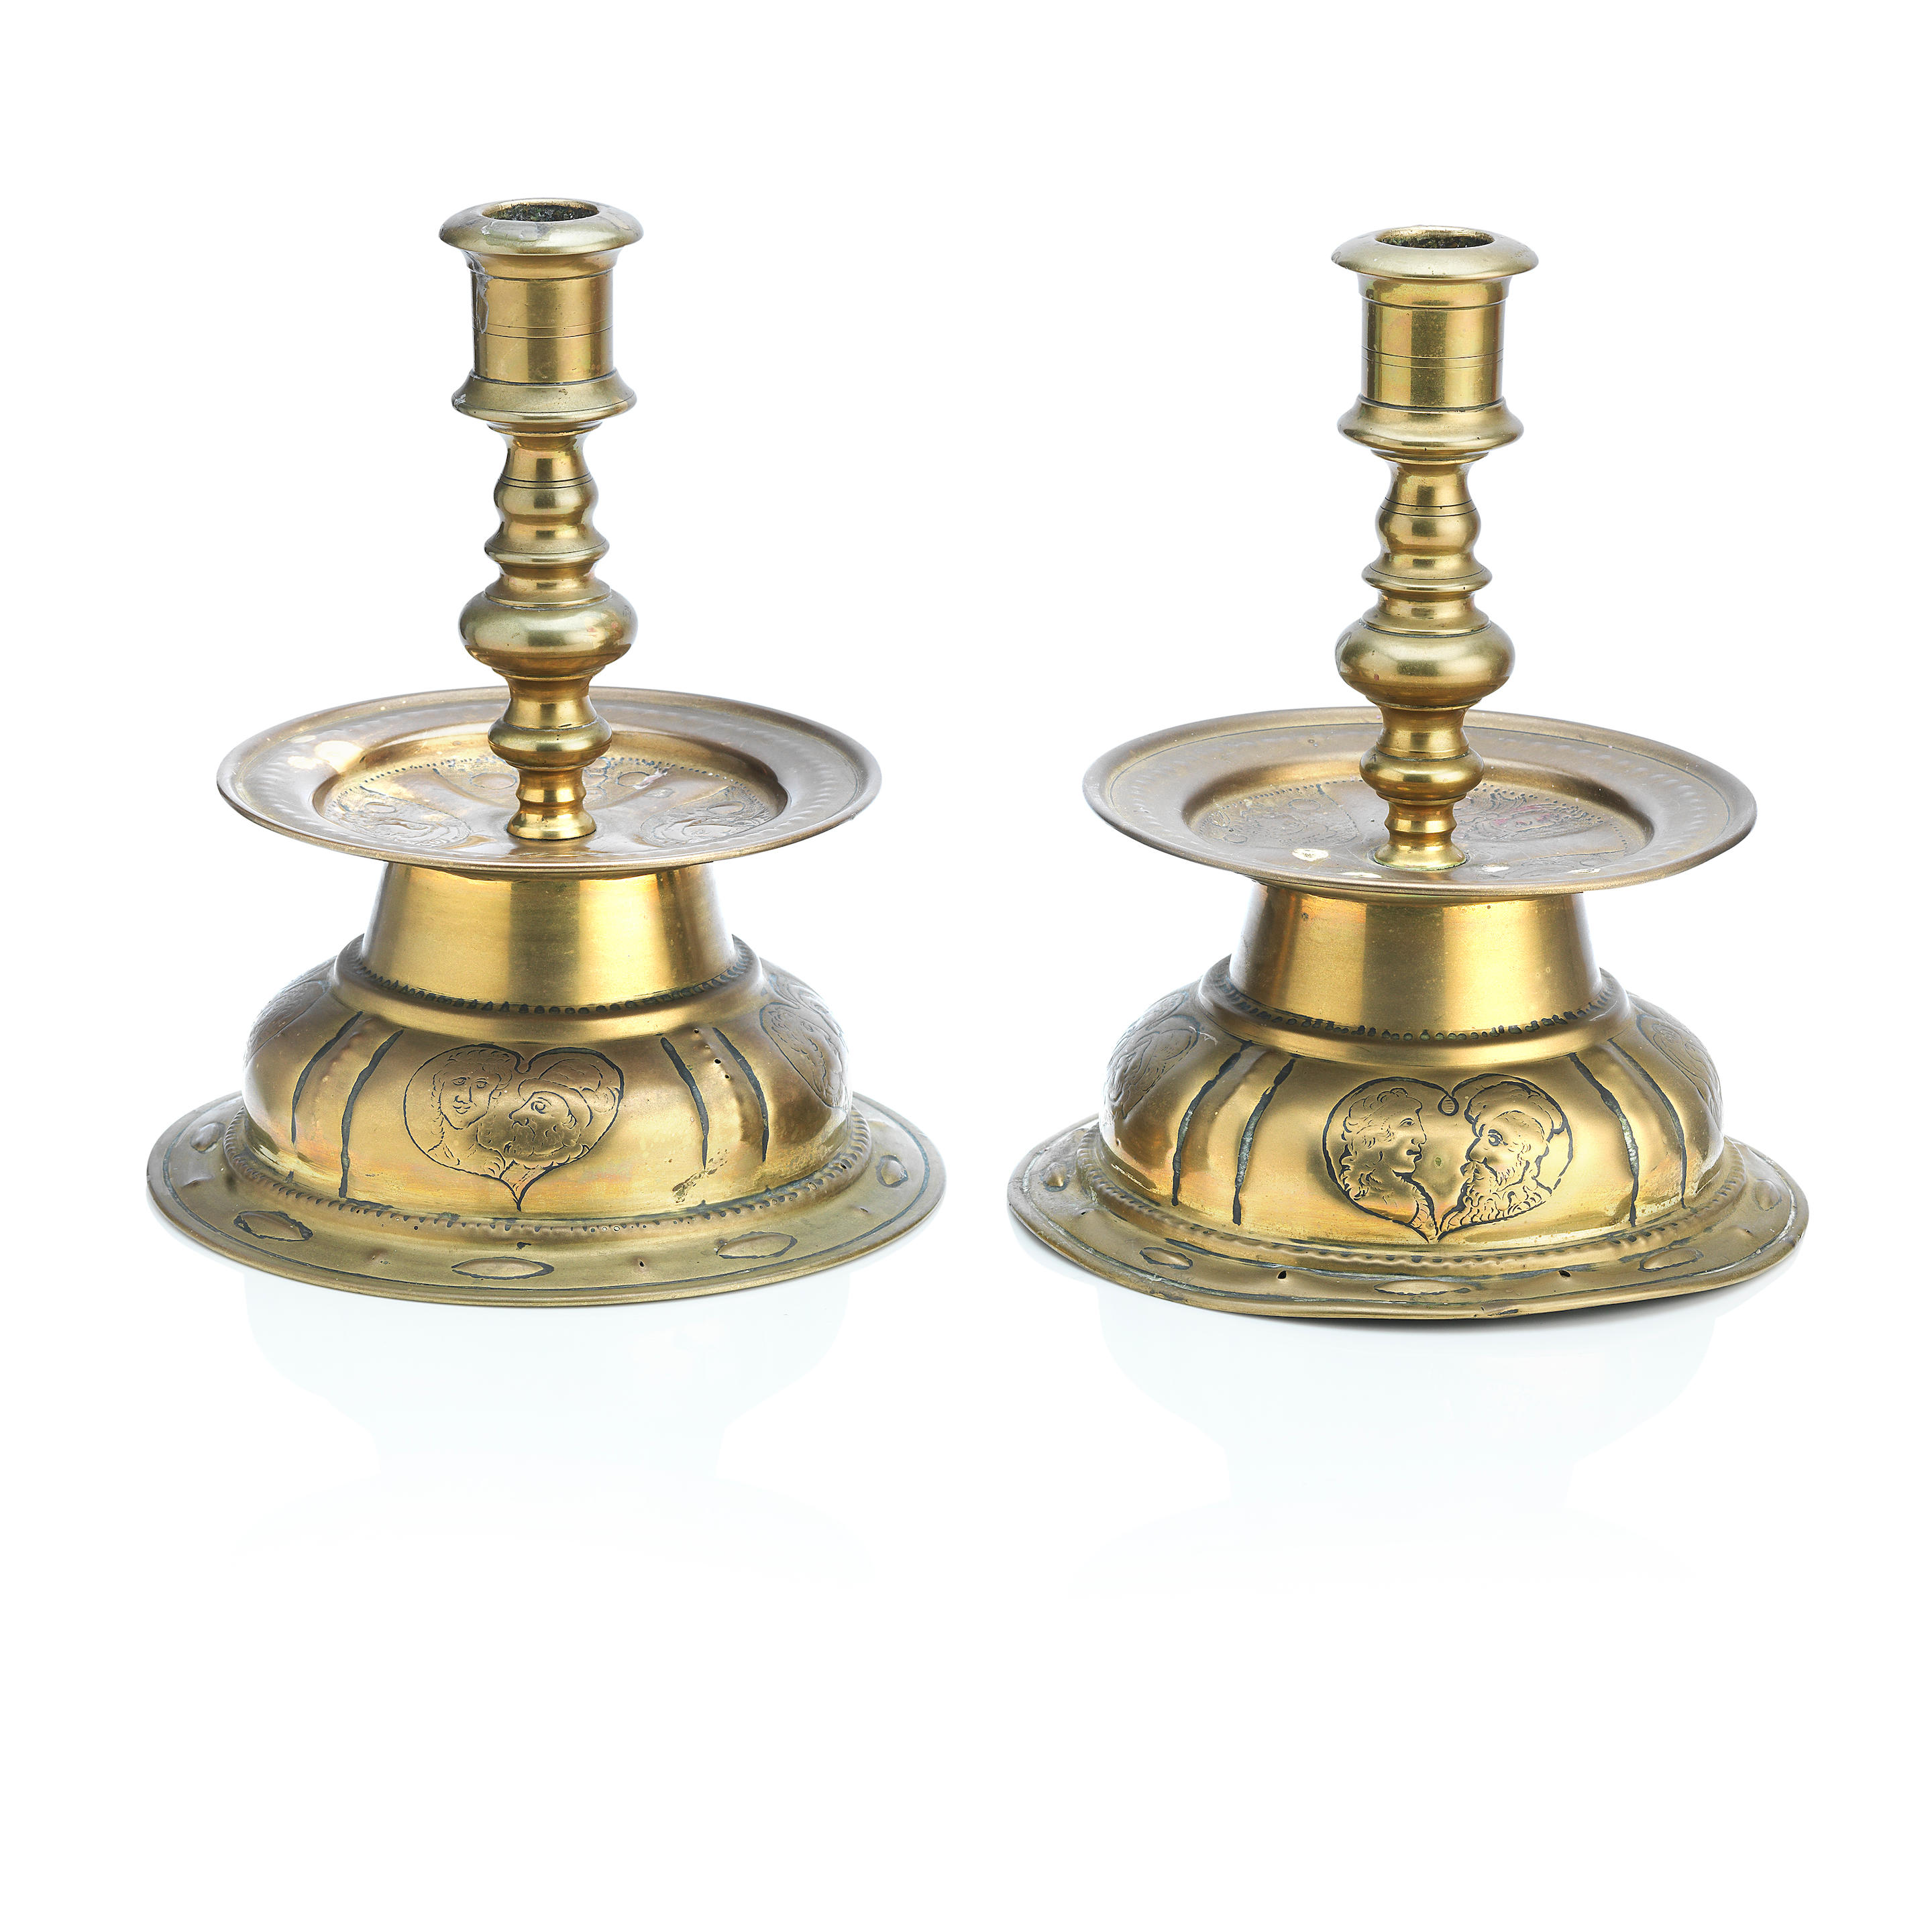 Bonhams : A pair of 17th century brass alloy pricket candlesticks